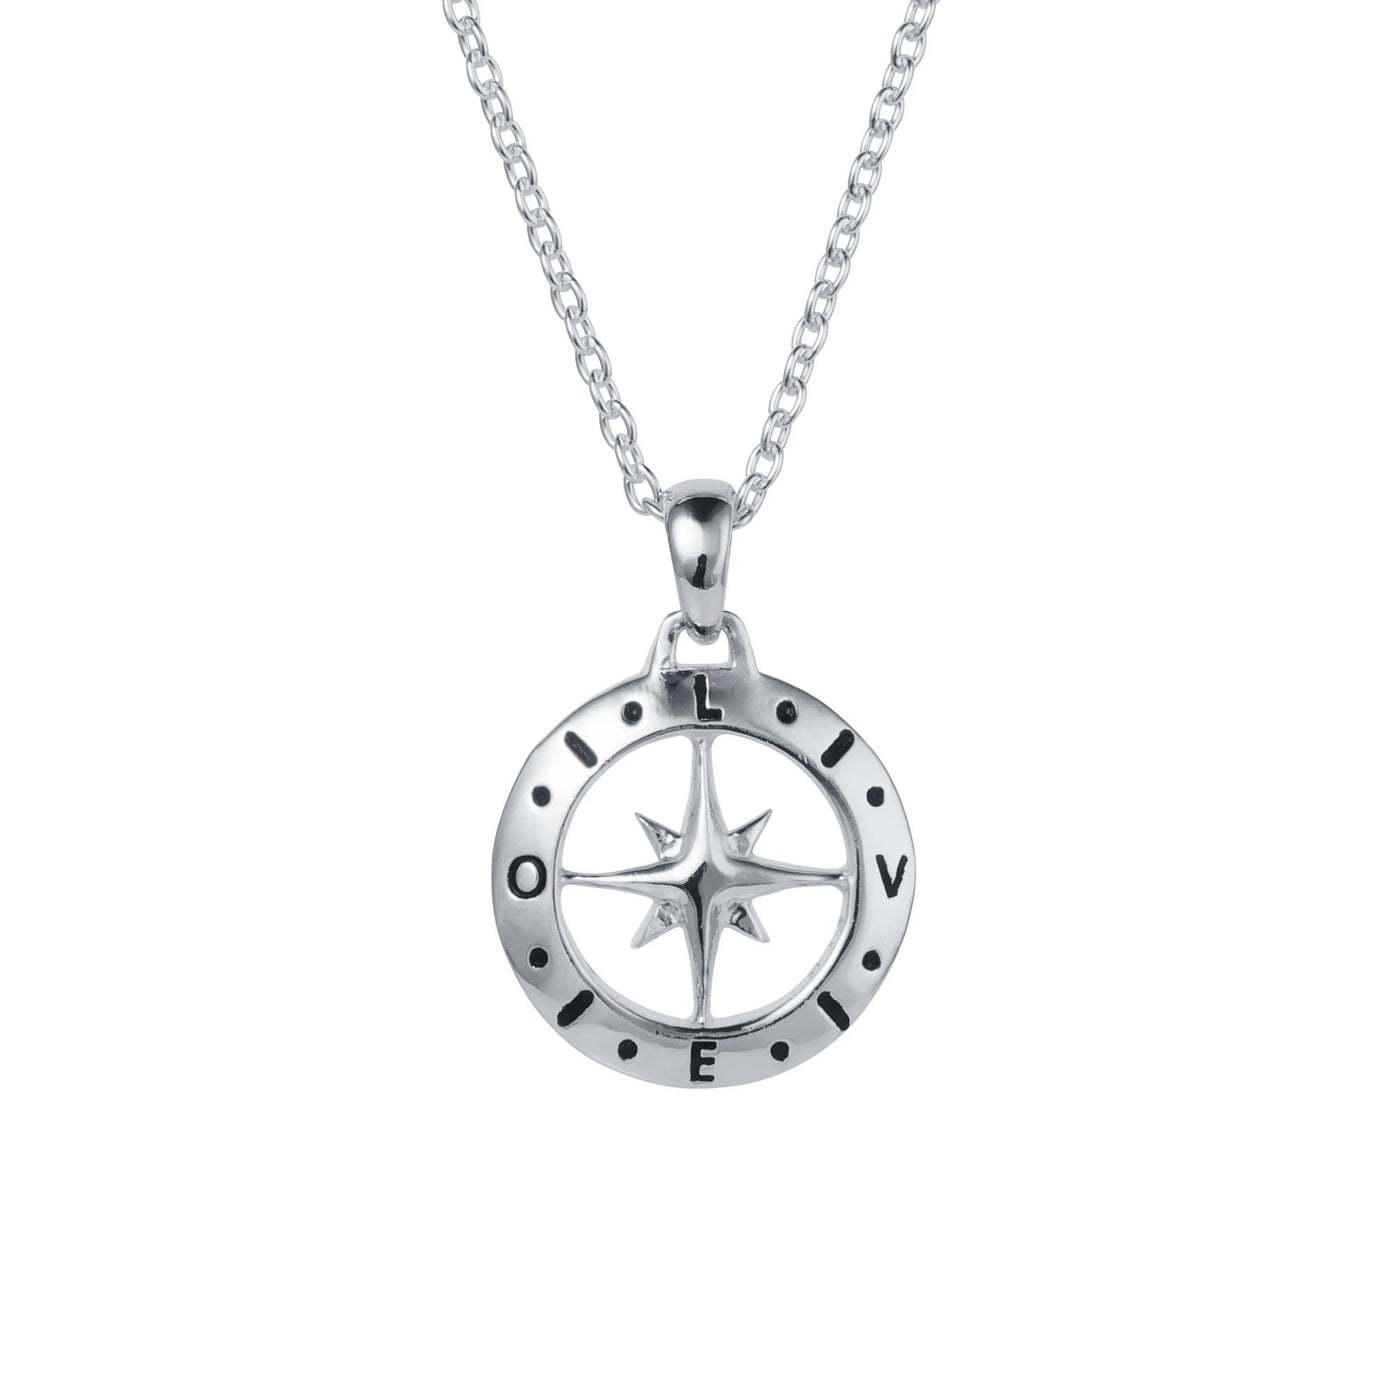 Silver Compass April Birthstone White Topaz Necklace